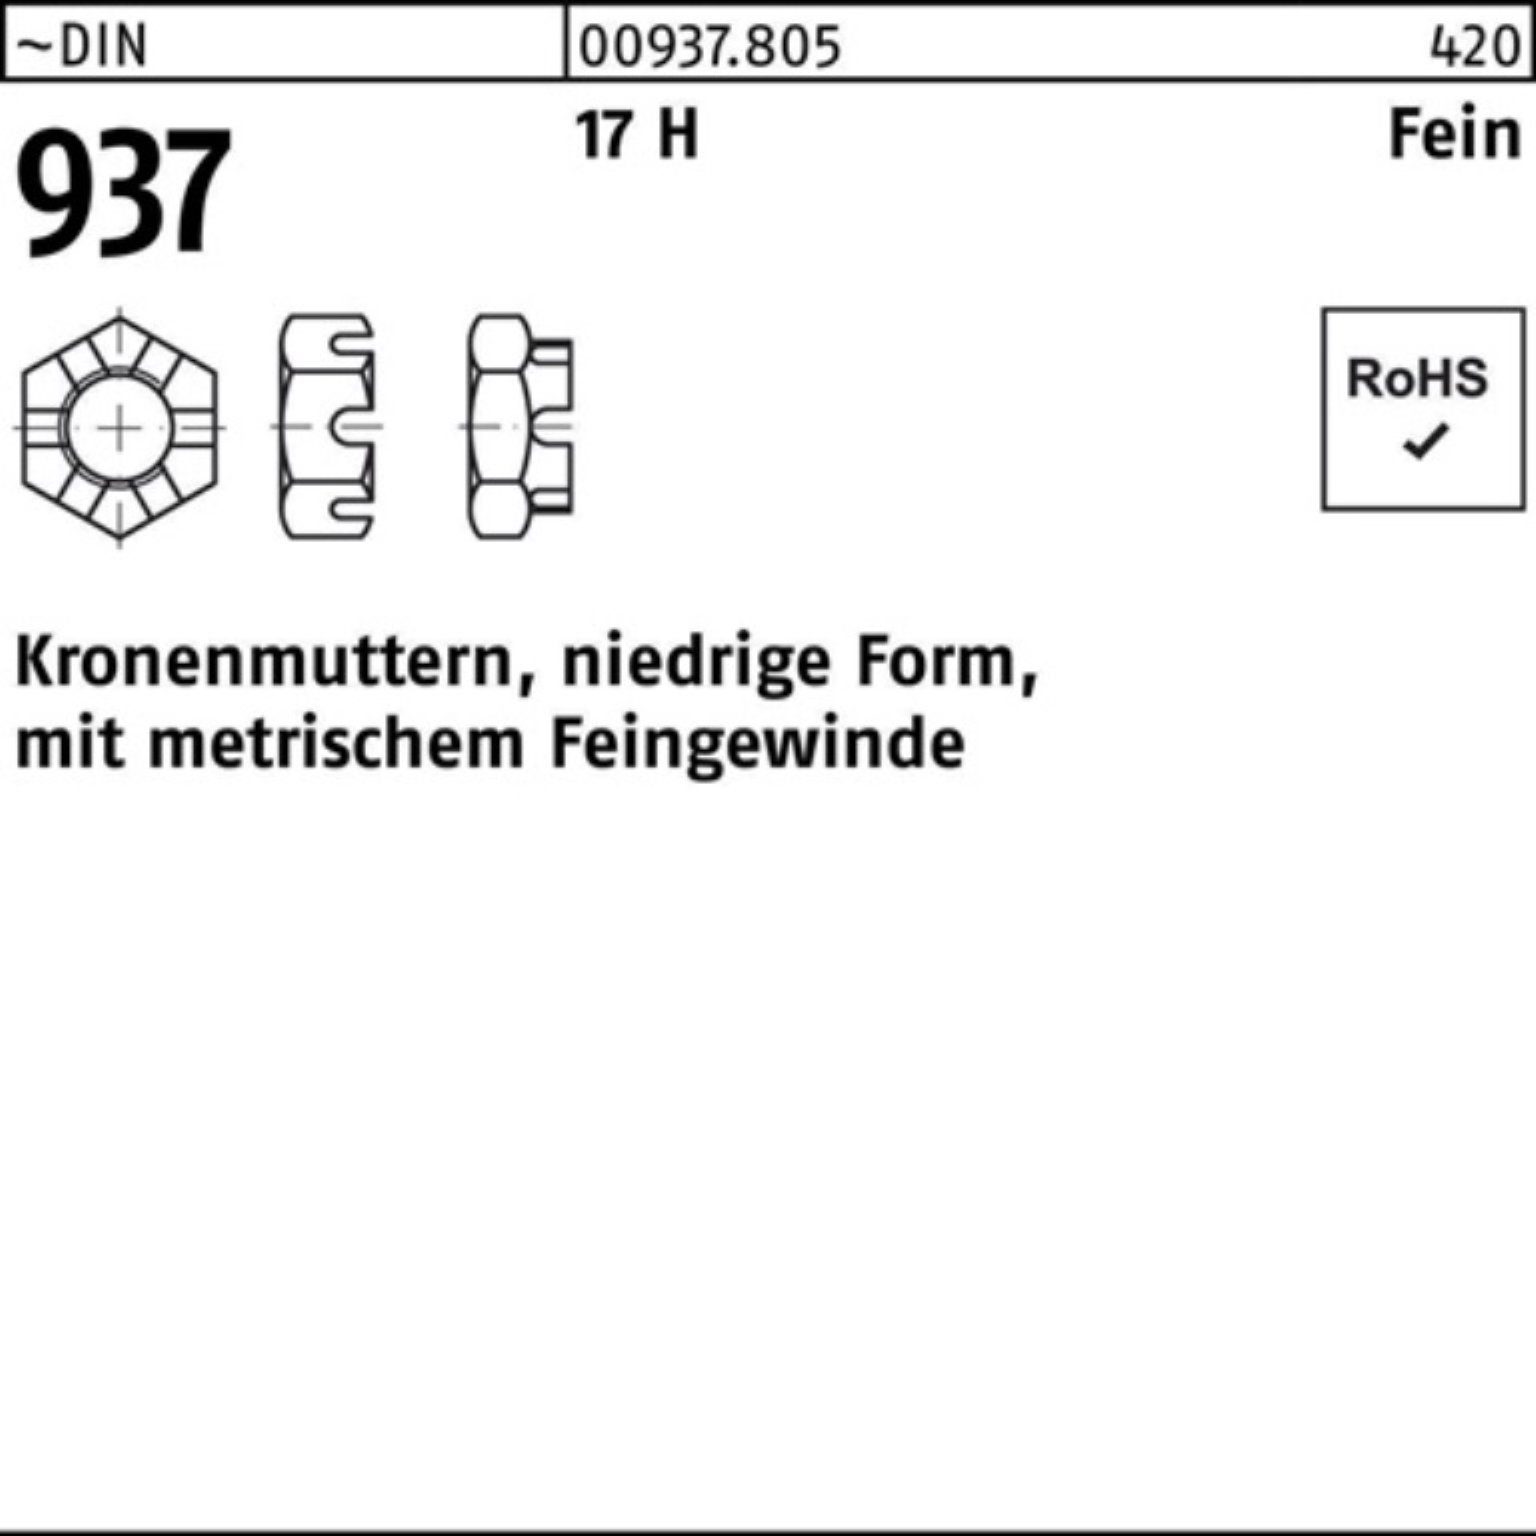 Reyher Kronenmutter 100er Pack Kronenmutter DIN 937 niedrige FormM48x 3 17 H Feingew. 1 St